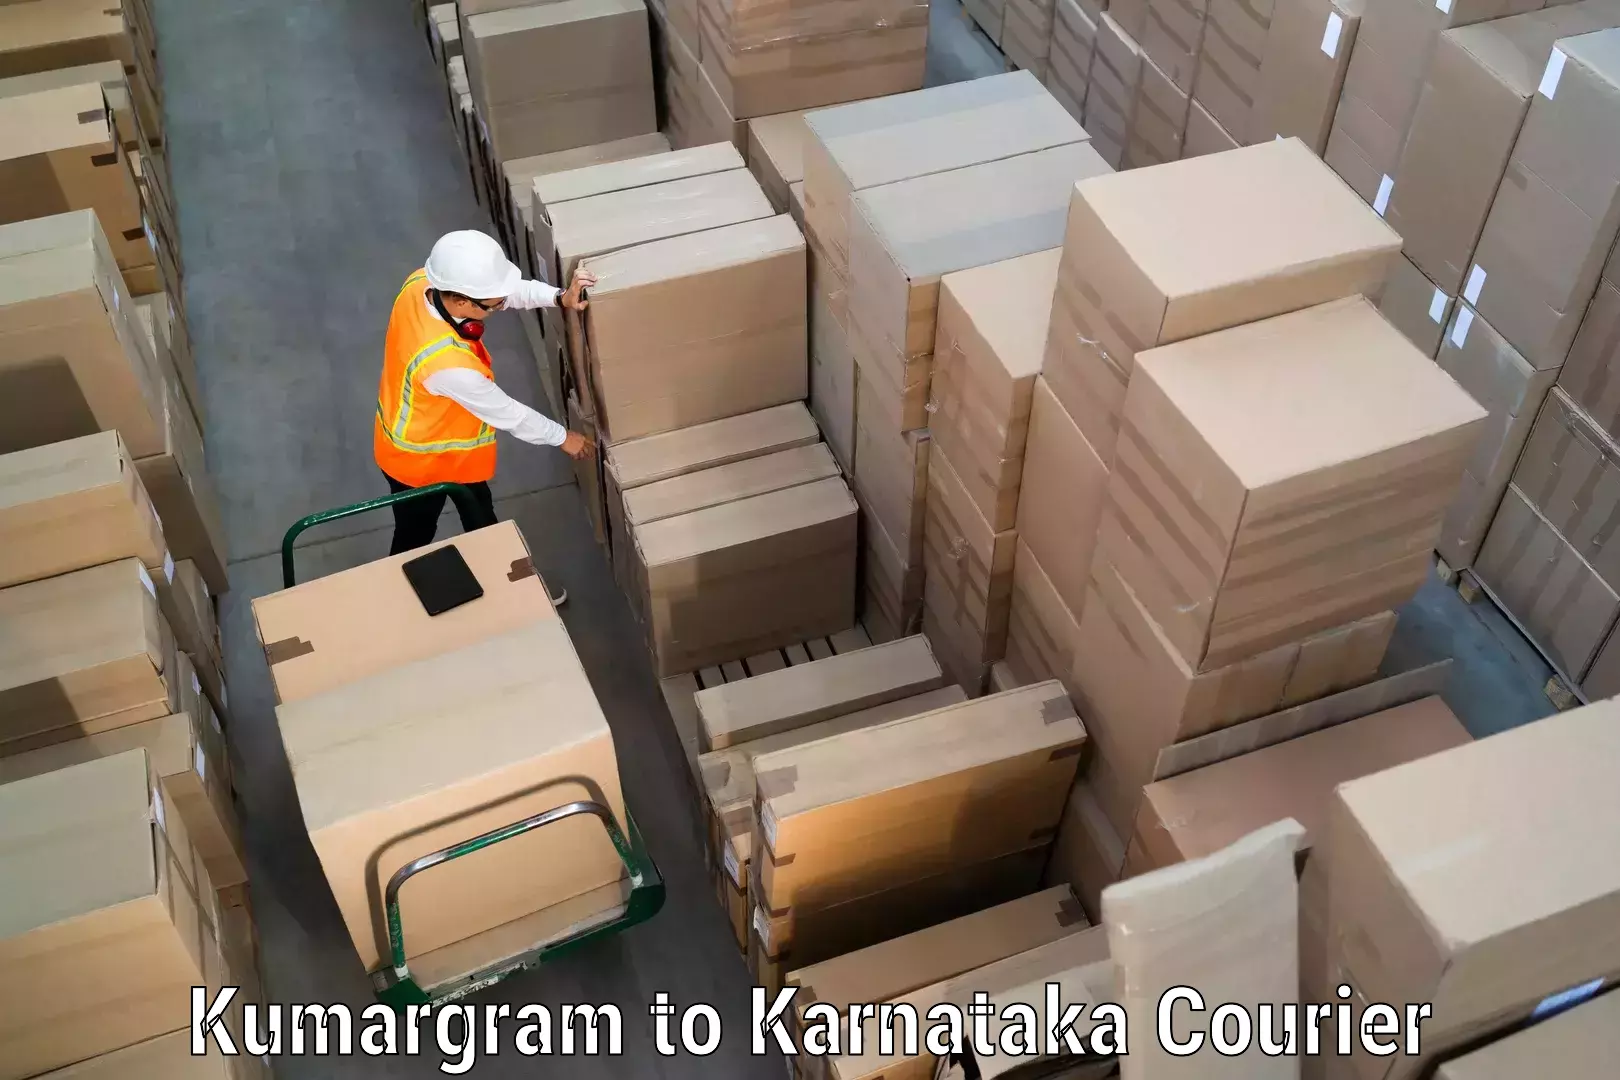 Premium courier solutions Kumargram to Kalaburagi